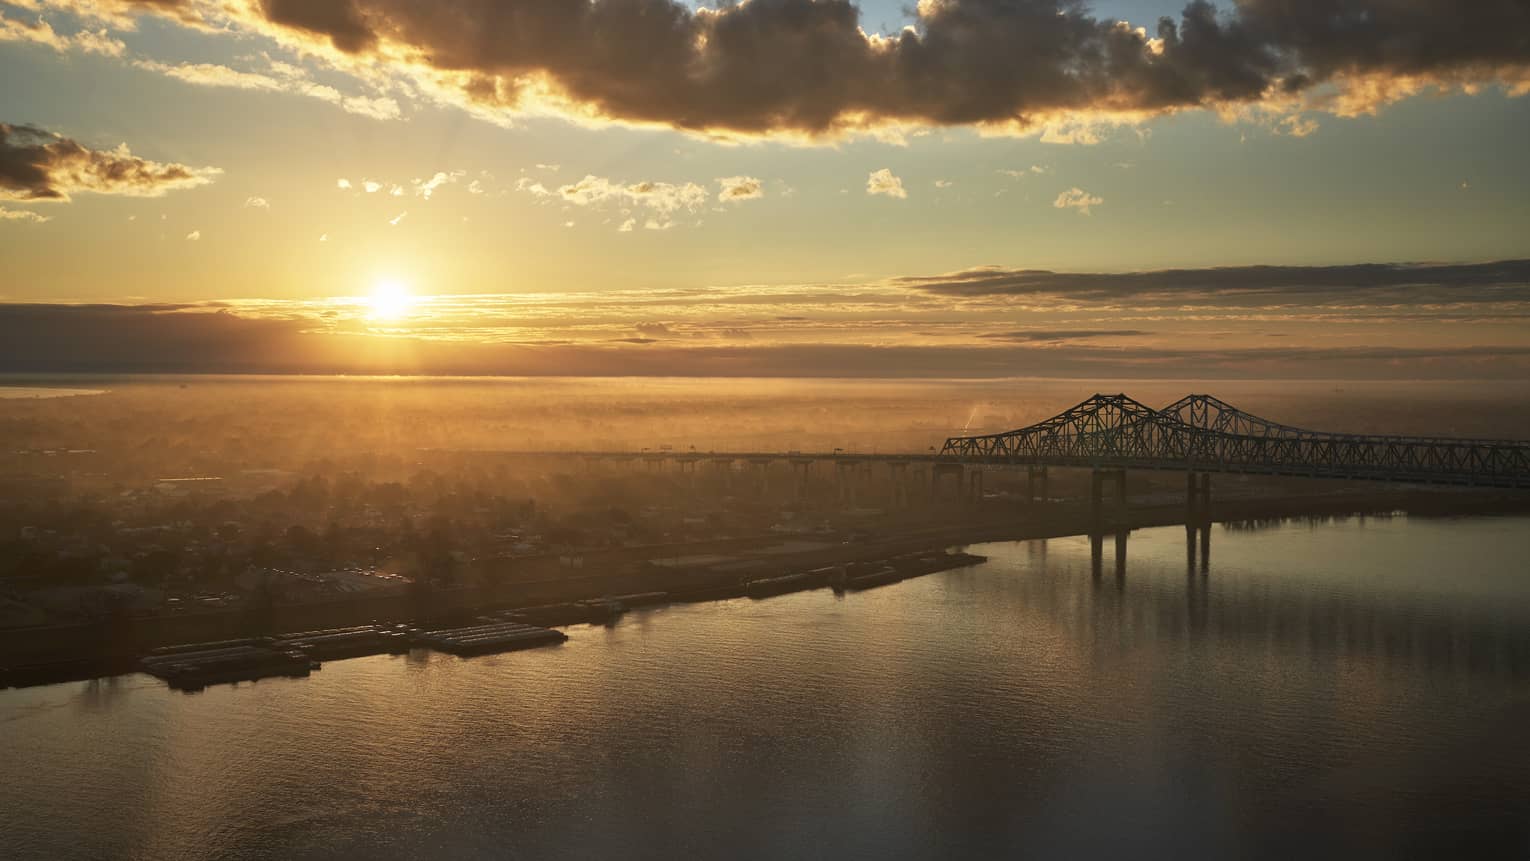 A sunrise near New Orleans bridge crossing a river.